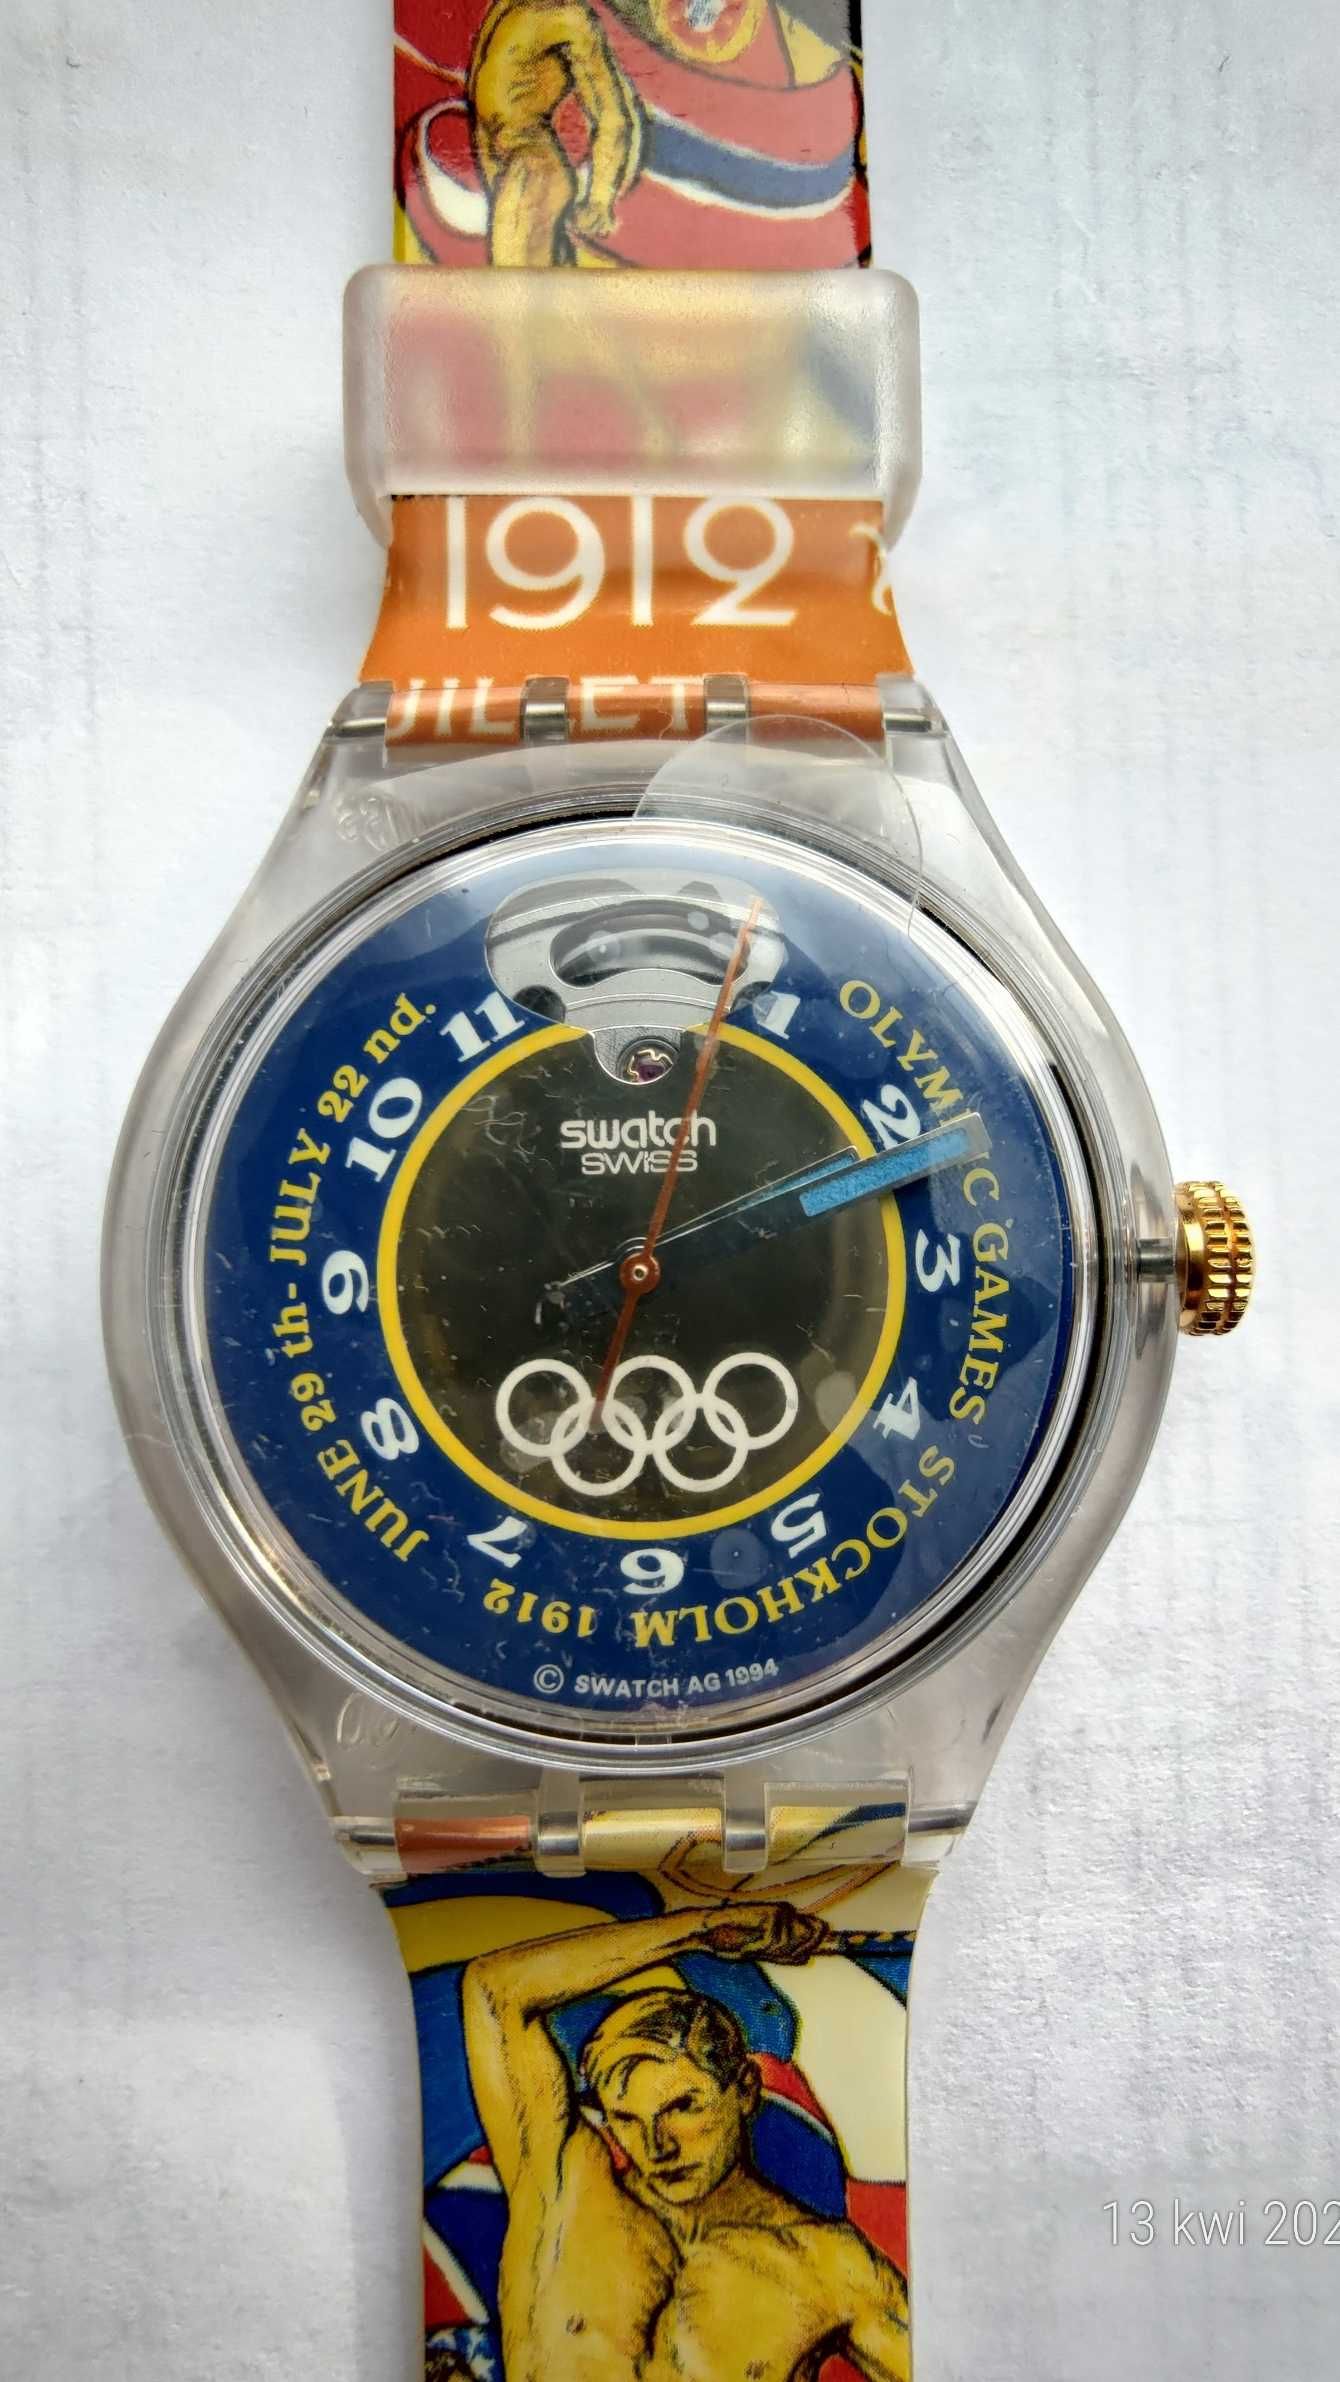 Swatch Stockholm 1912 Atlanta 1996 SAZ103 zegarek